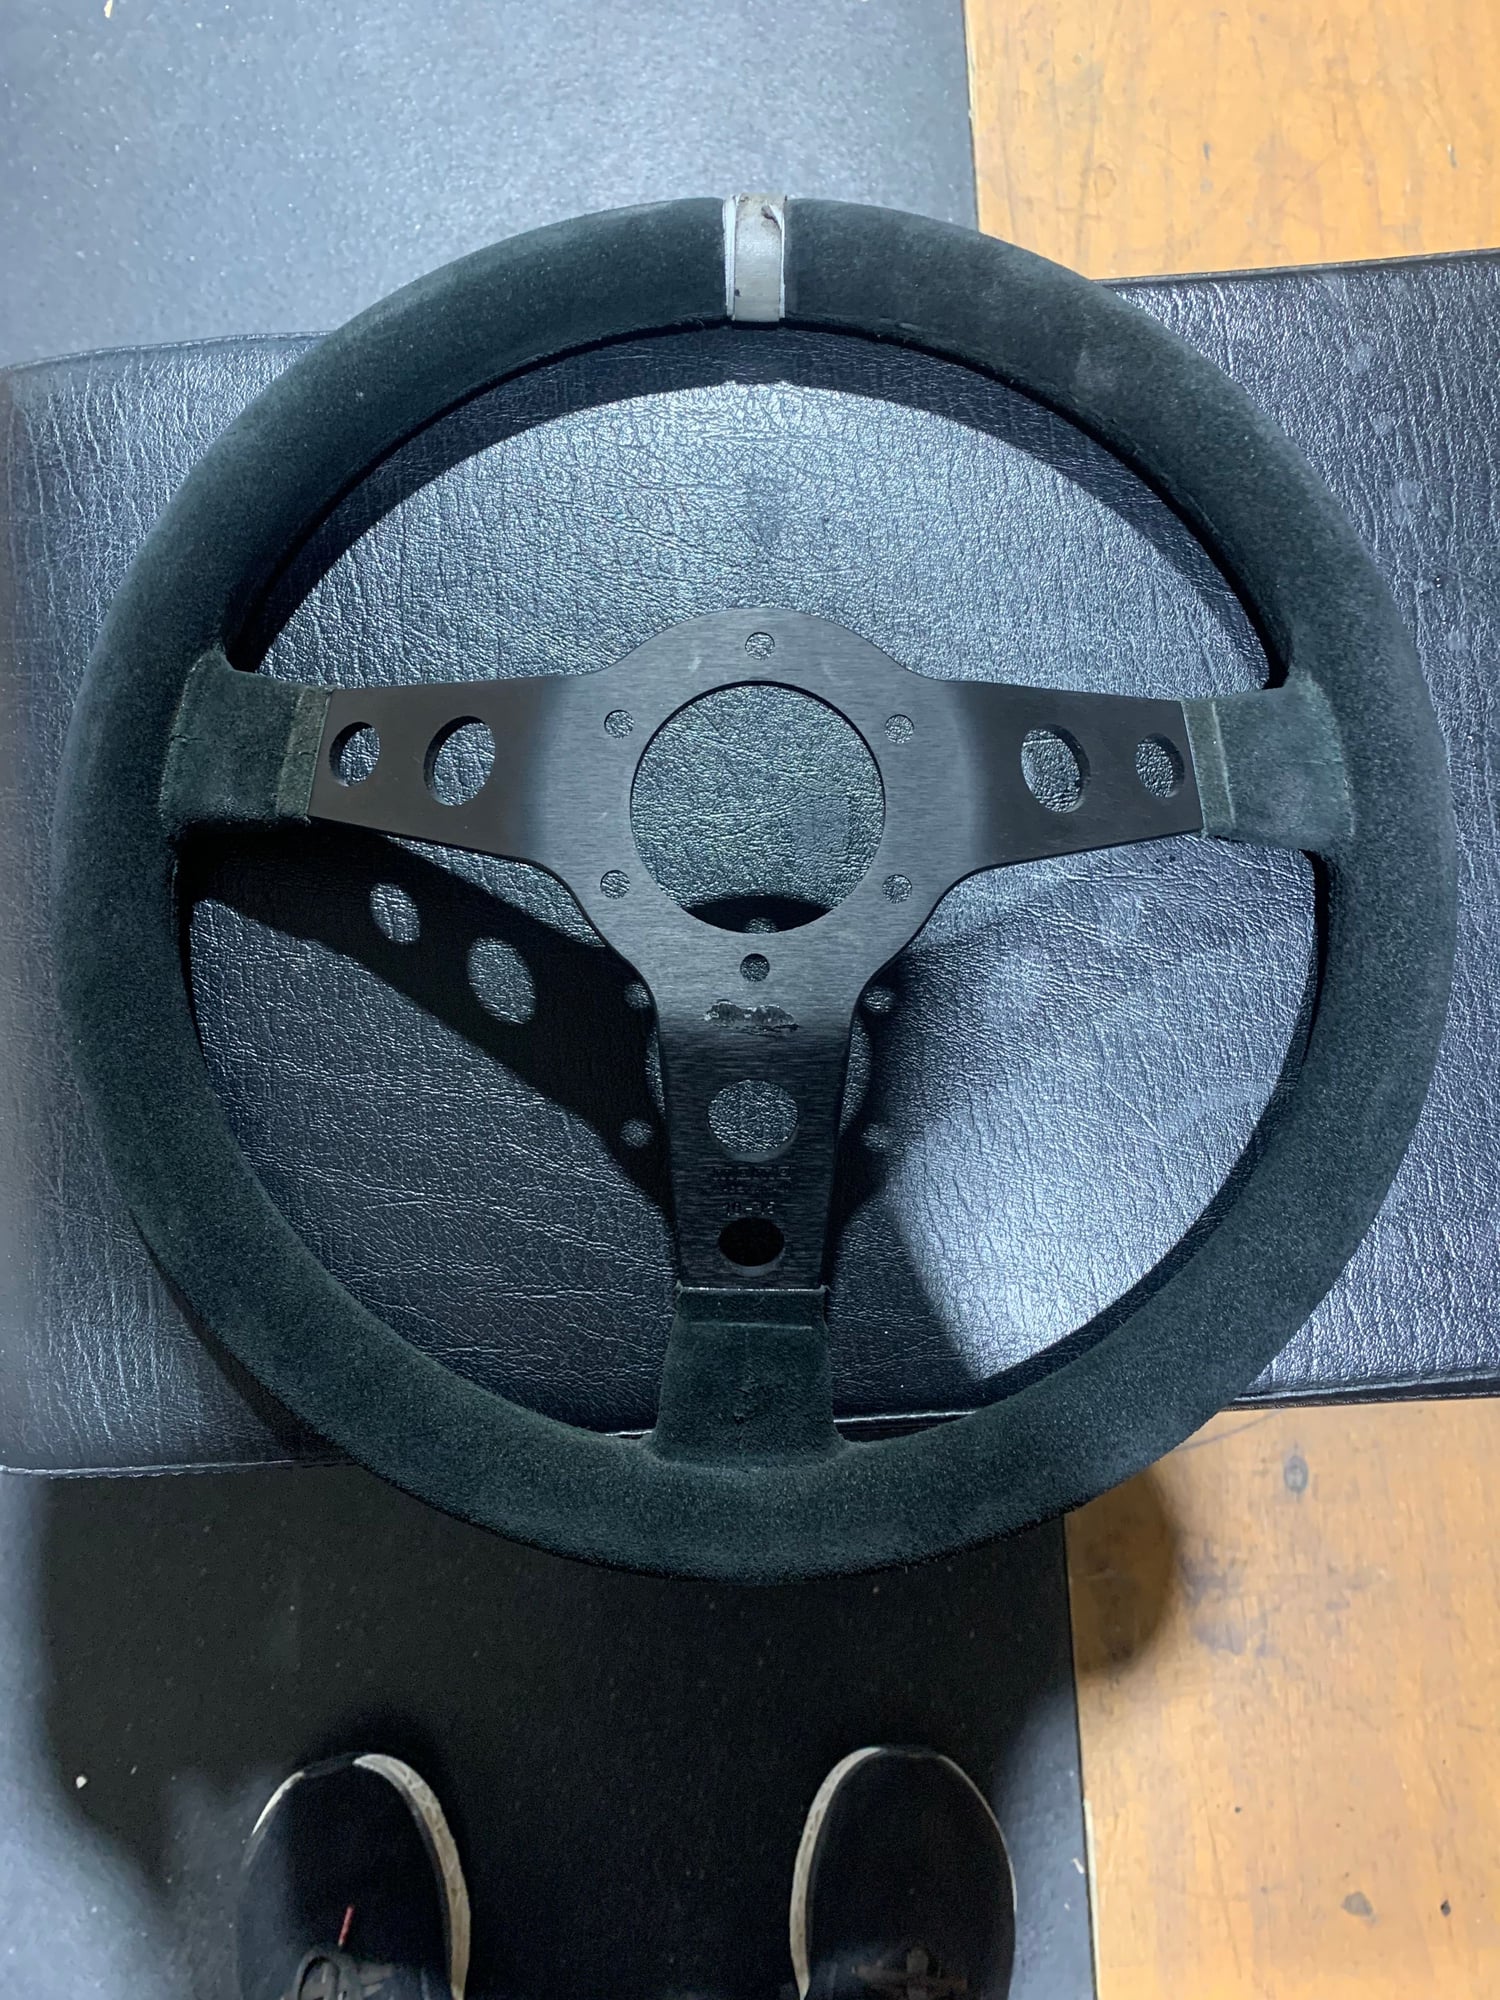 Steering/Suspension - Porsche Momo Steering Wheel w/ Hub Adapter - Used - All Years Porsche 911 - Houston, TX 77043, United States